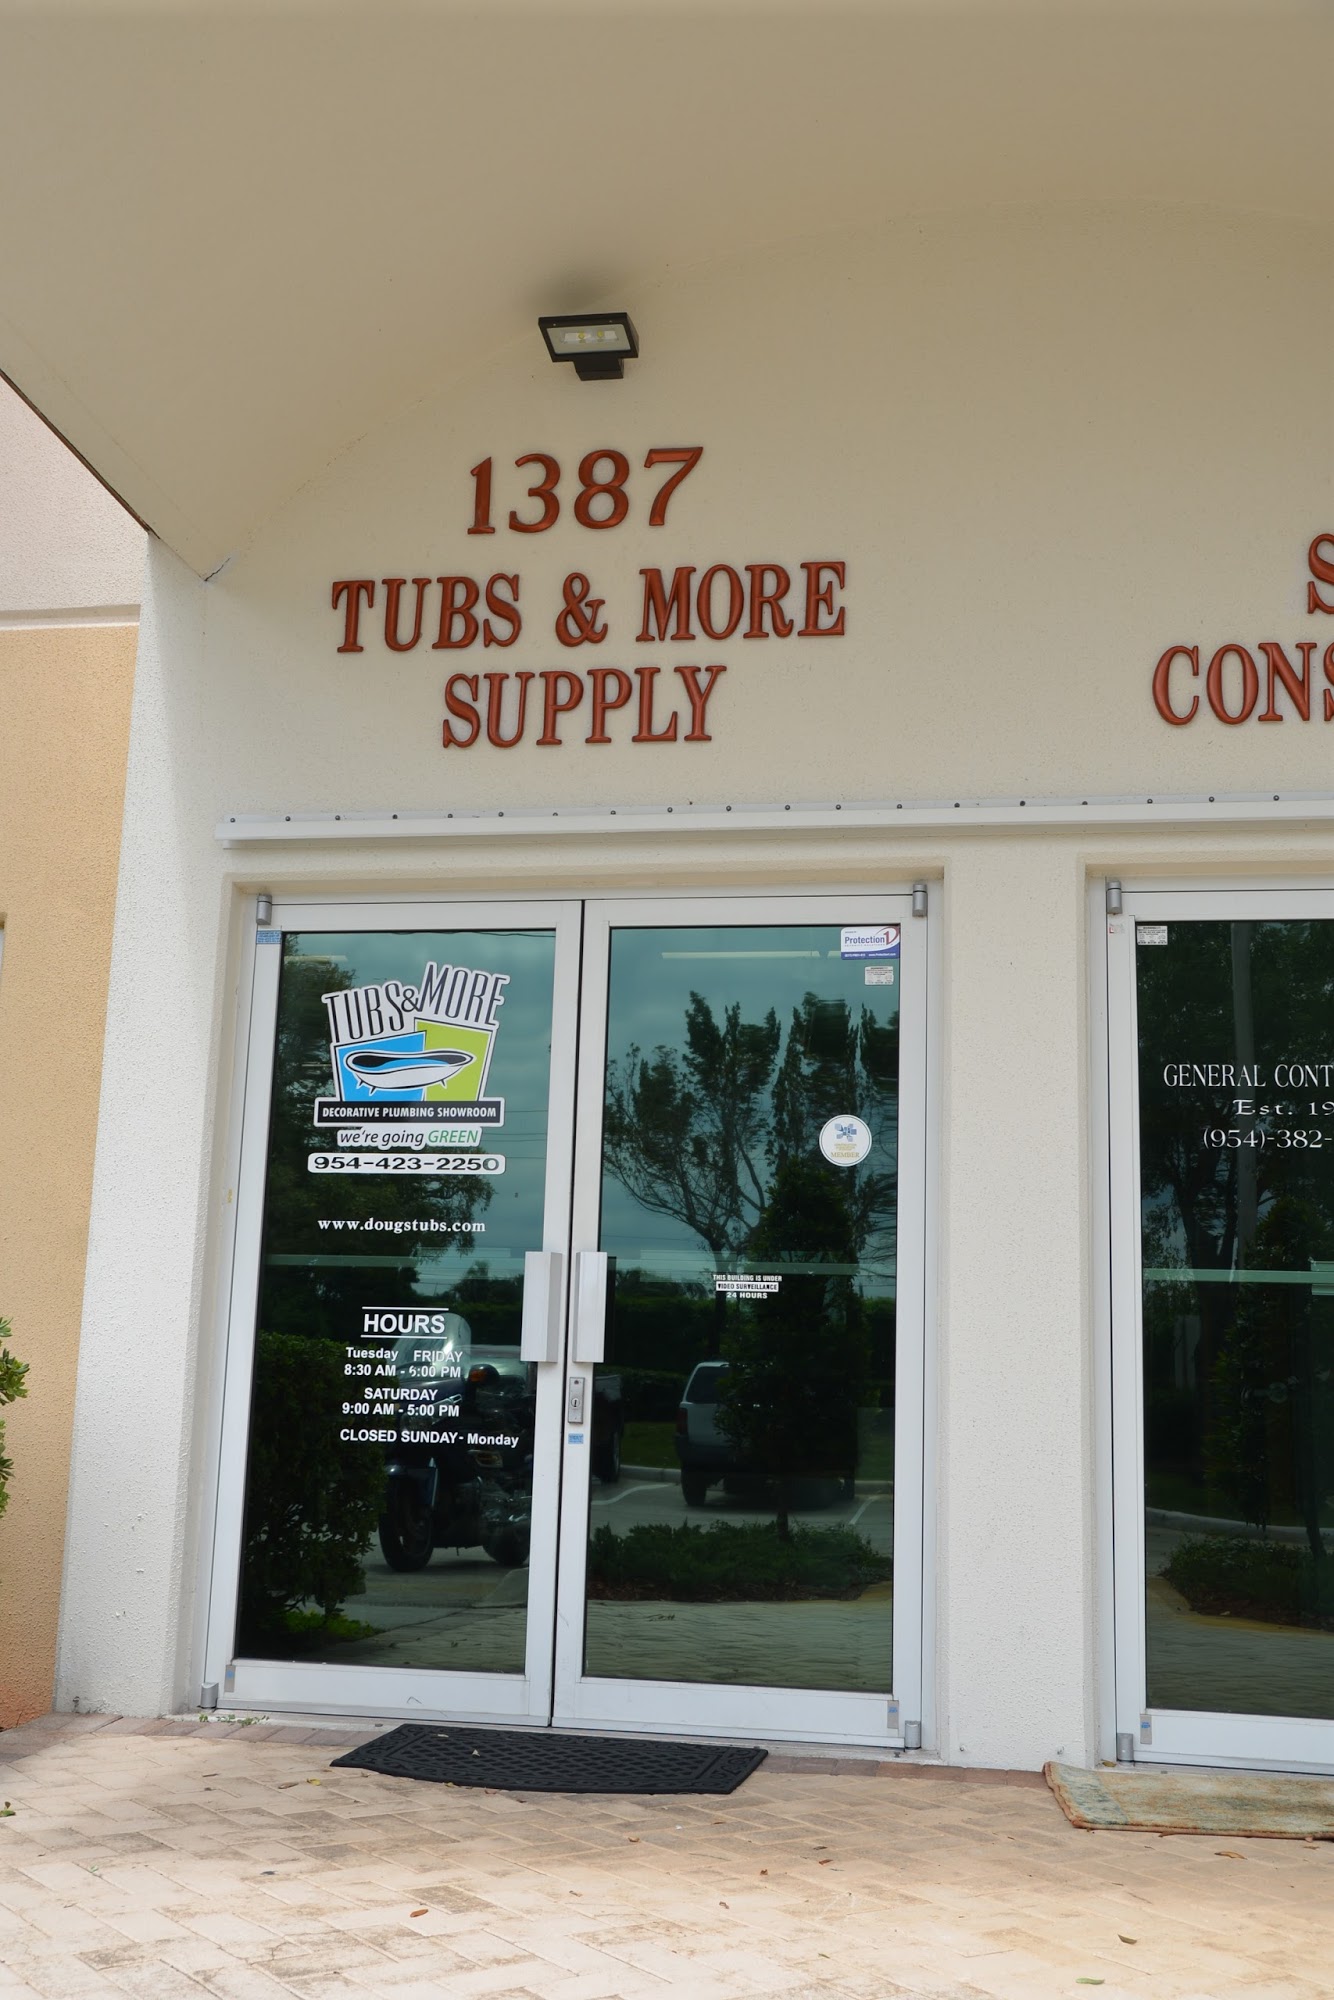 Tubs & More Plumbing Showroom